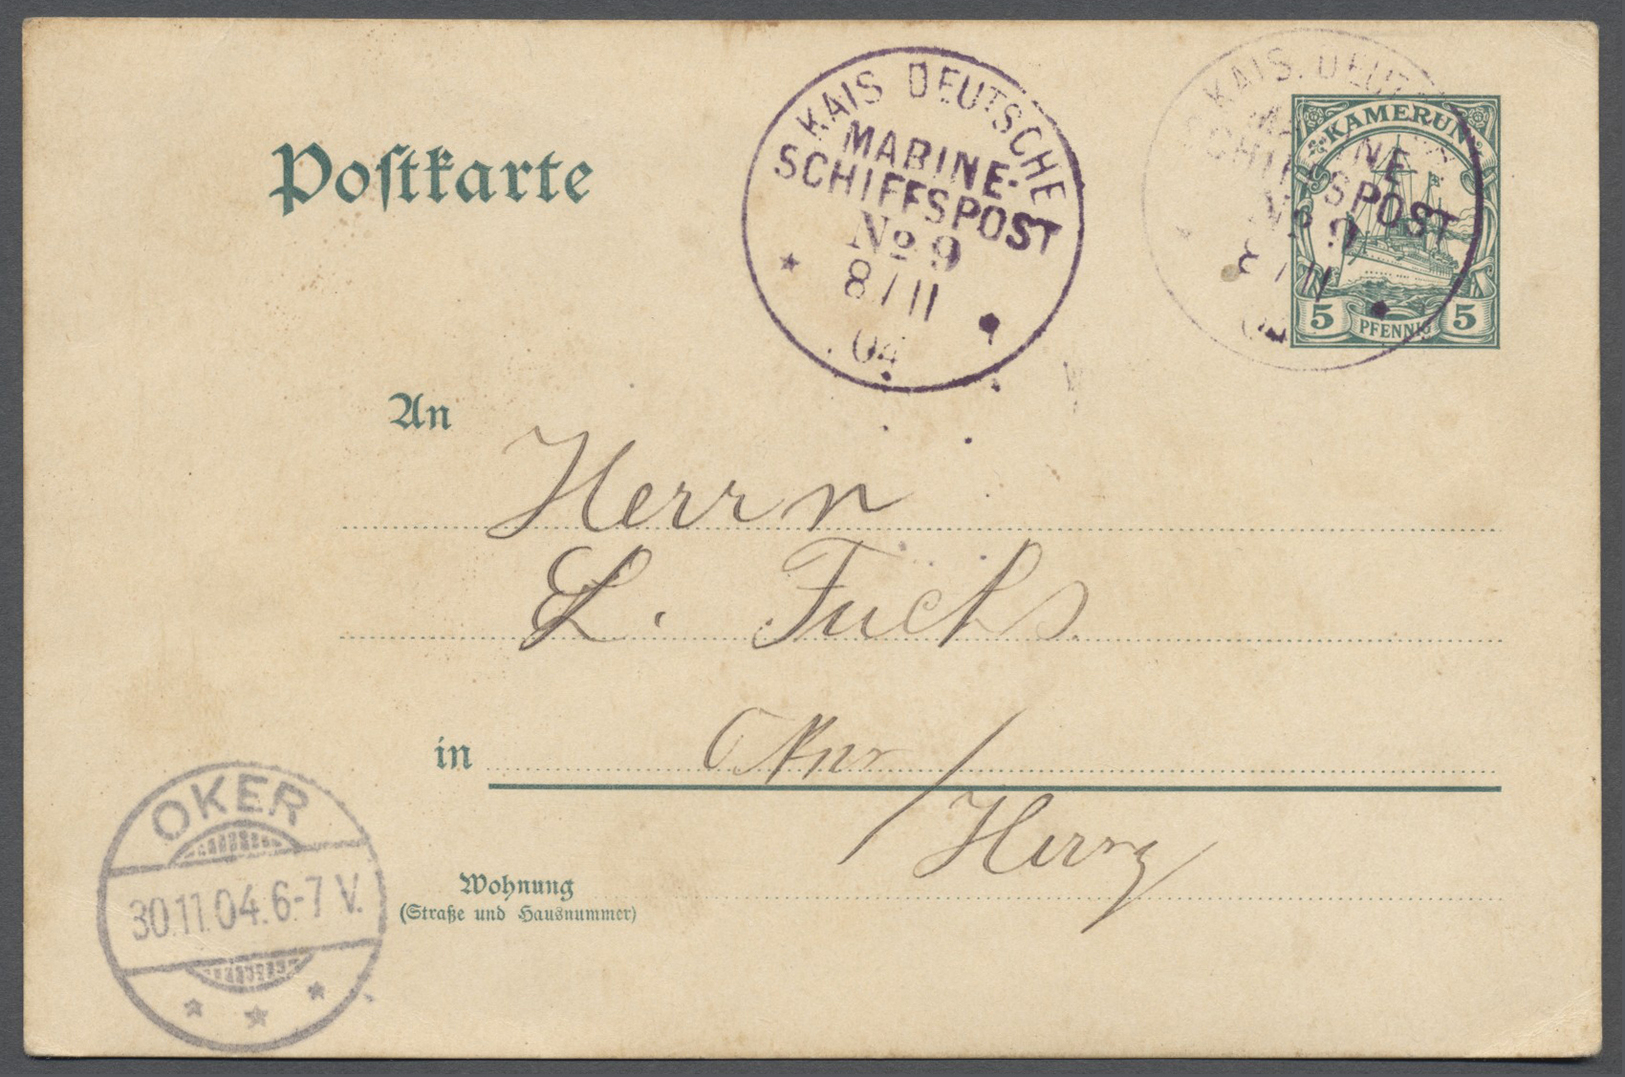 GA Deutsche Kolonien - Kamerun - Stempel: 1904, "KAIS.DEUTSCHE MARINE-SCHIFFSPOST No.9 8/11" (= SMS "Ha - Kameroen